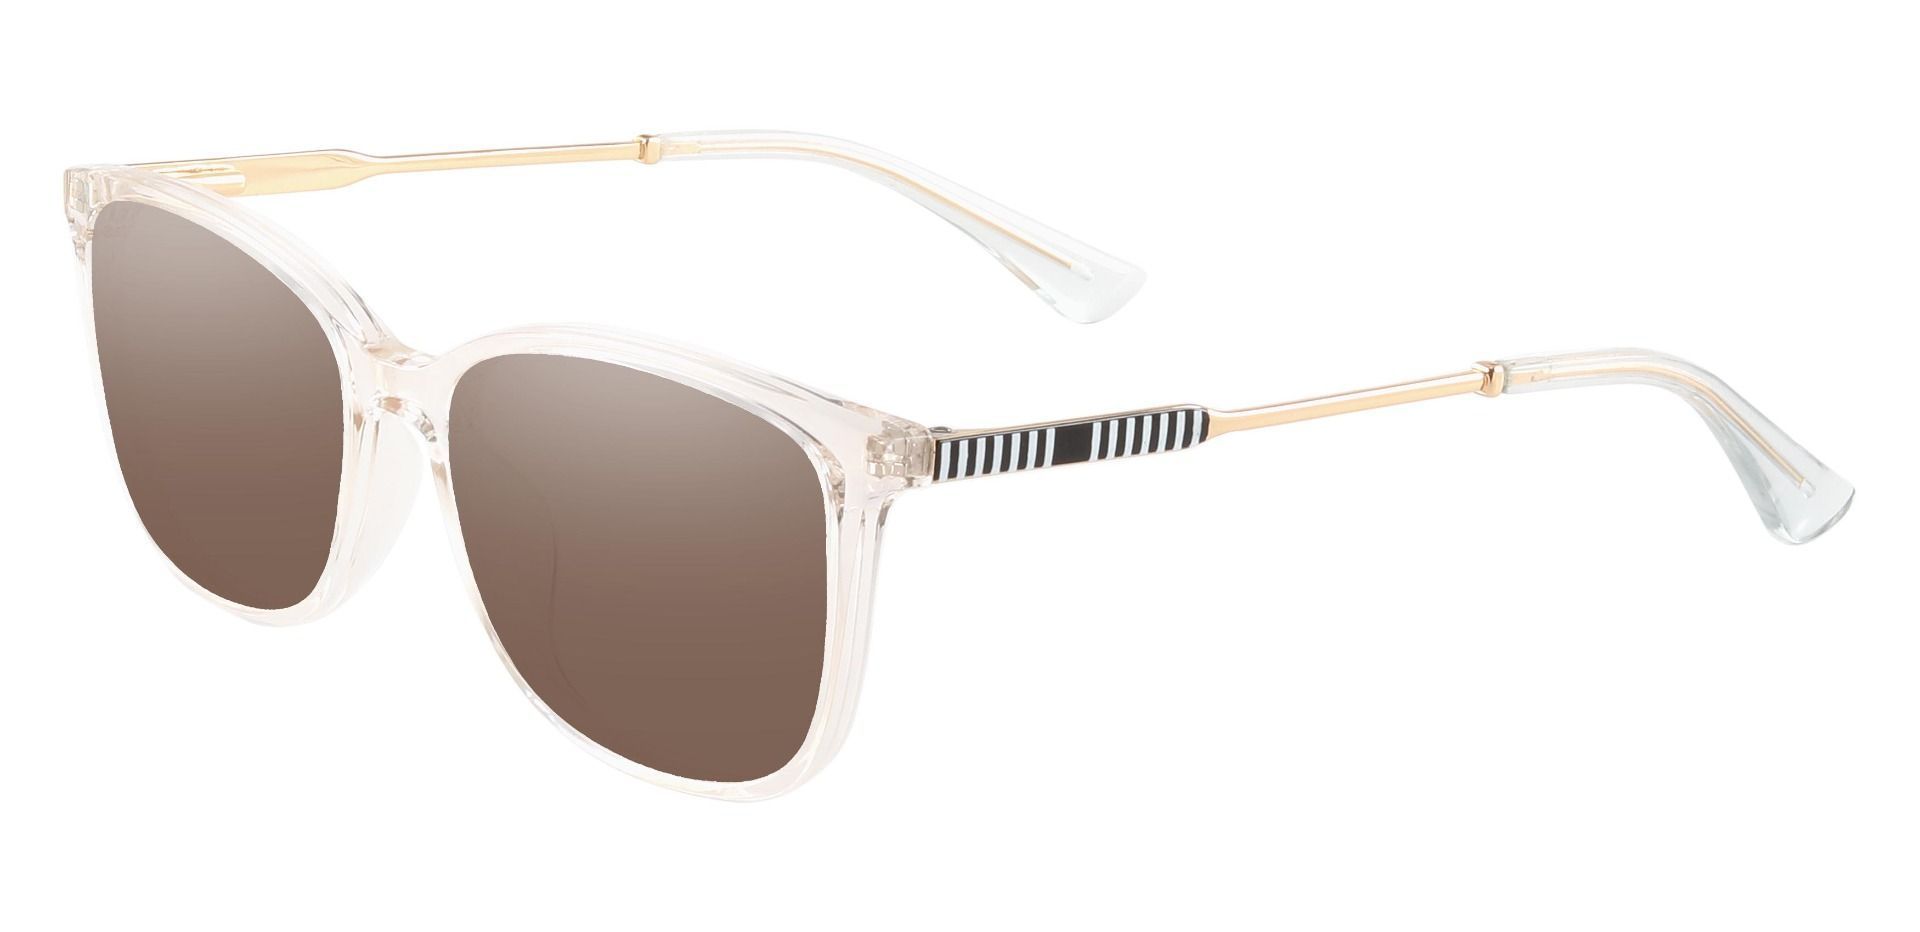 Miami Rectangle Prescription Sunglasses - Clear Frame With Brown Lenses